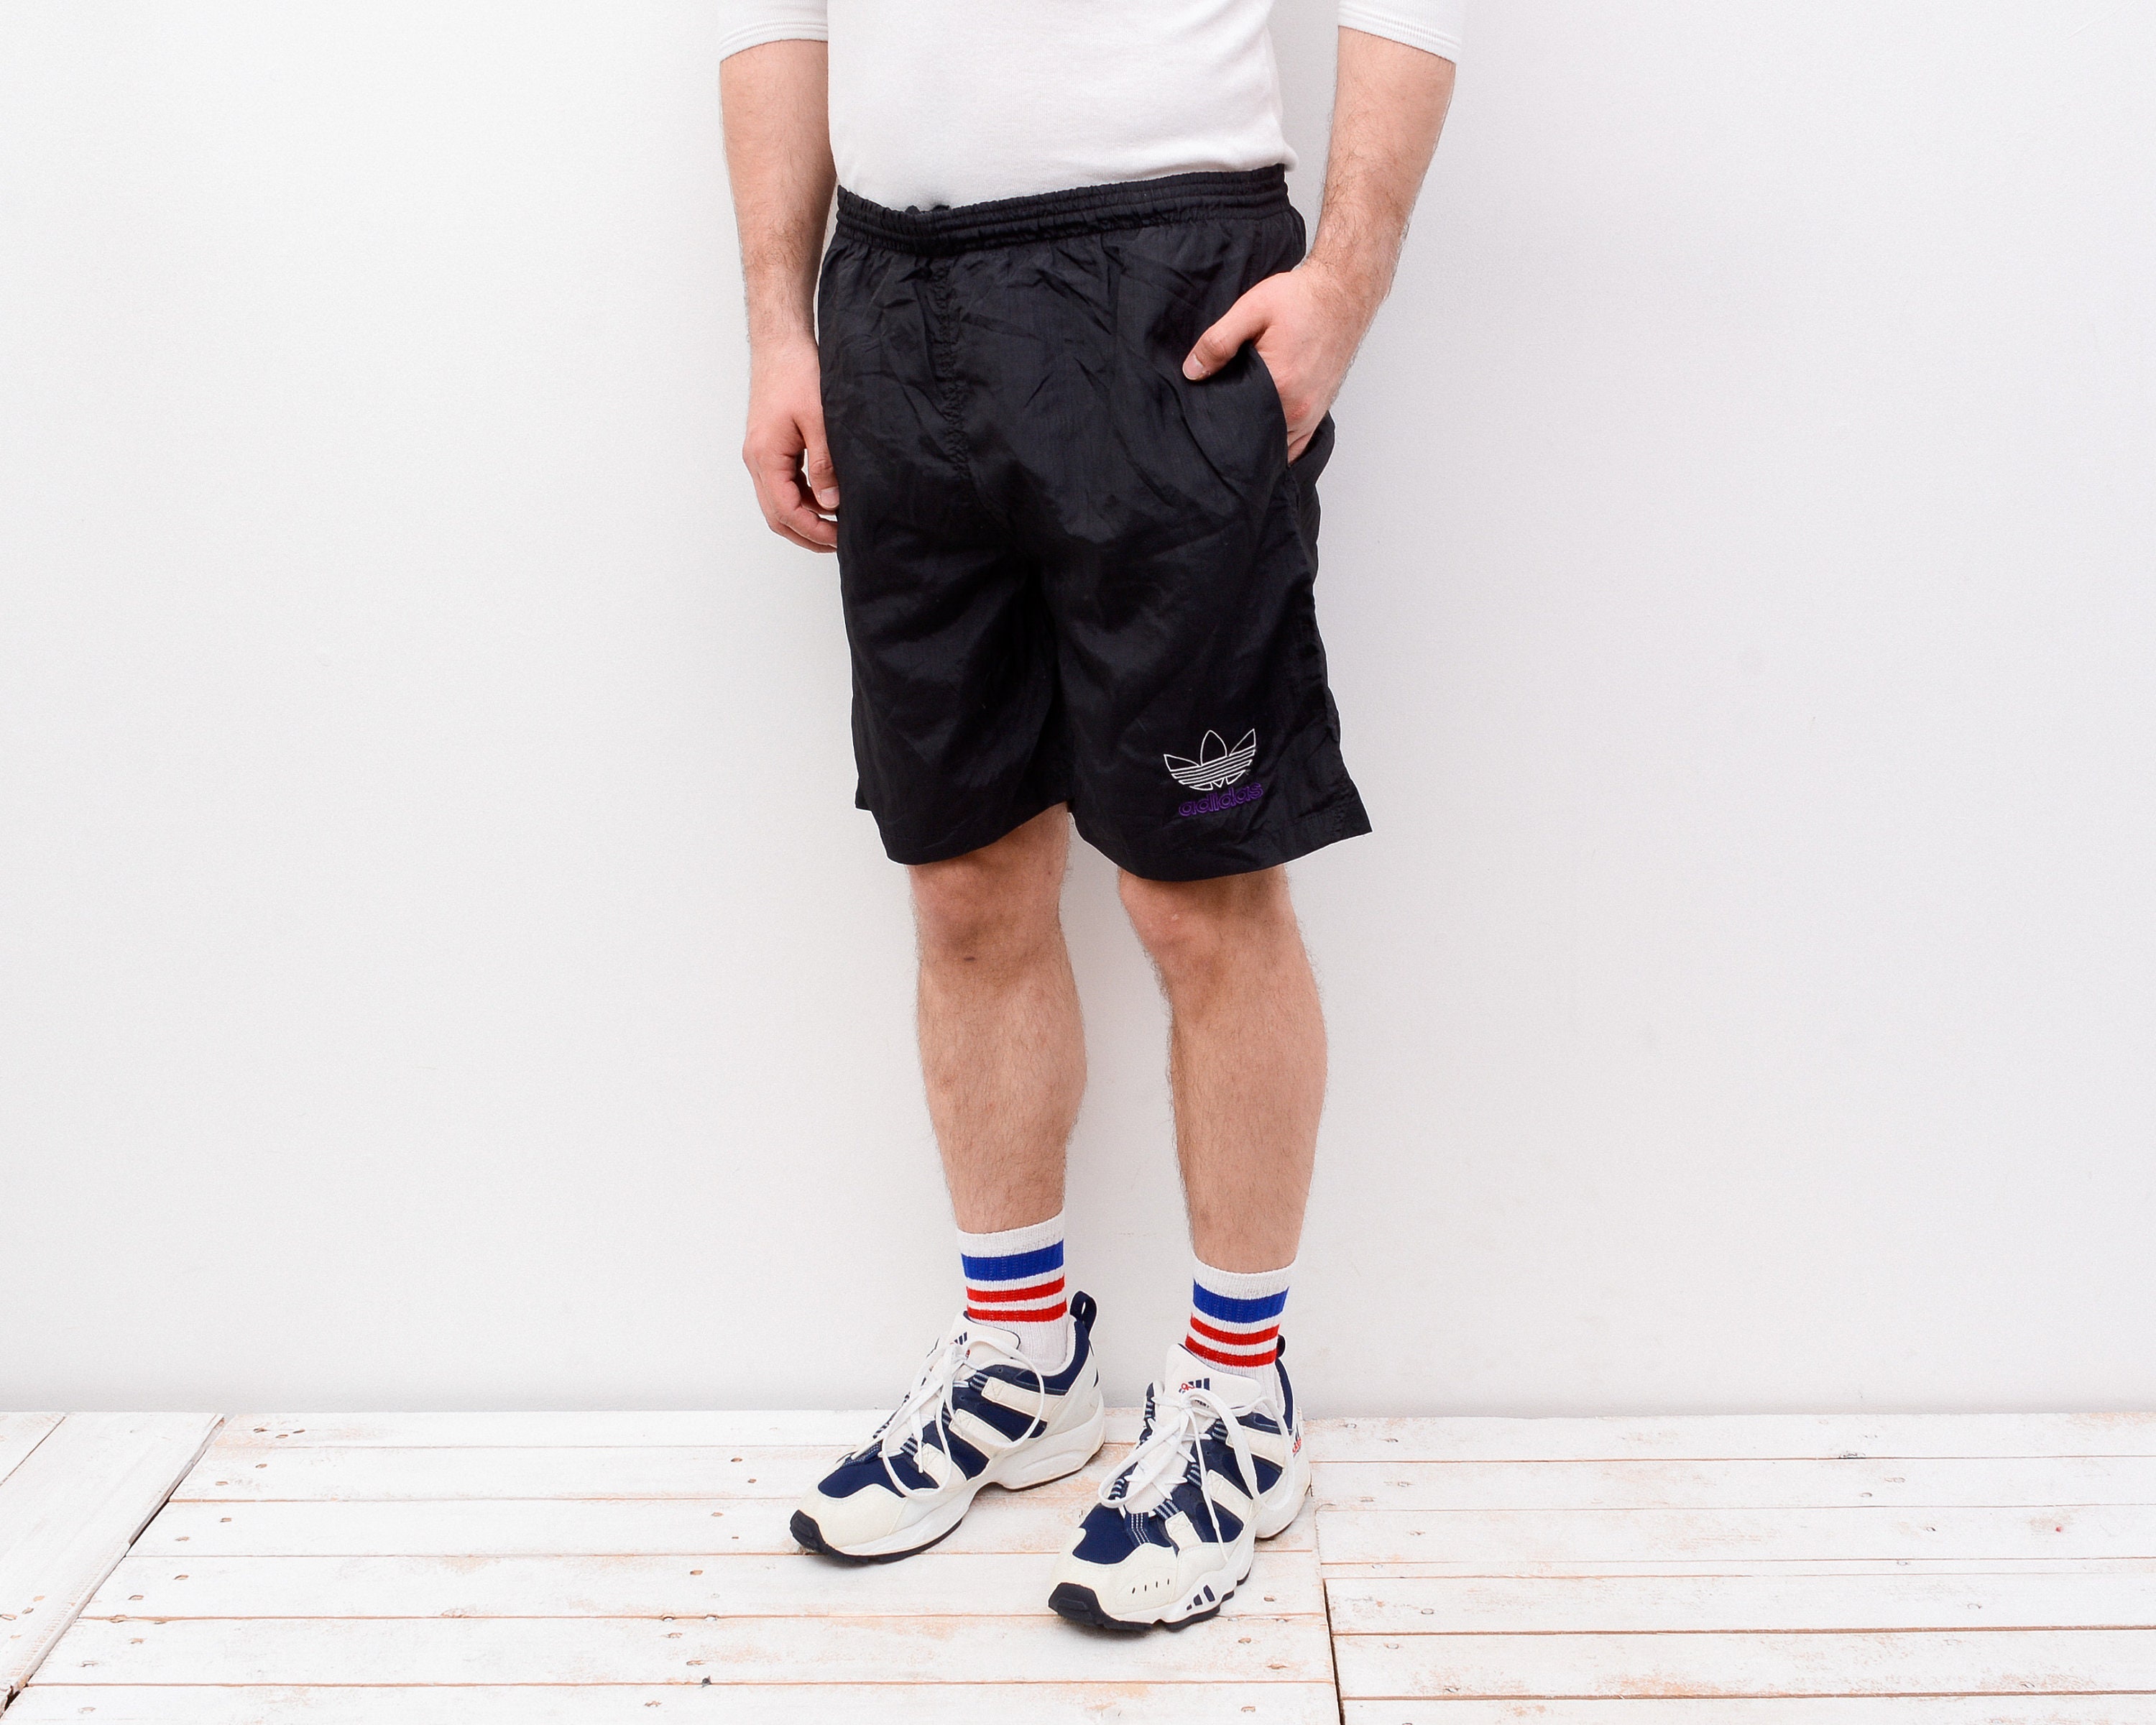 Adidas Vintage 80 shorts Sprinter Ygoslavia. 80 шорты